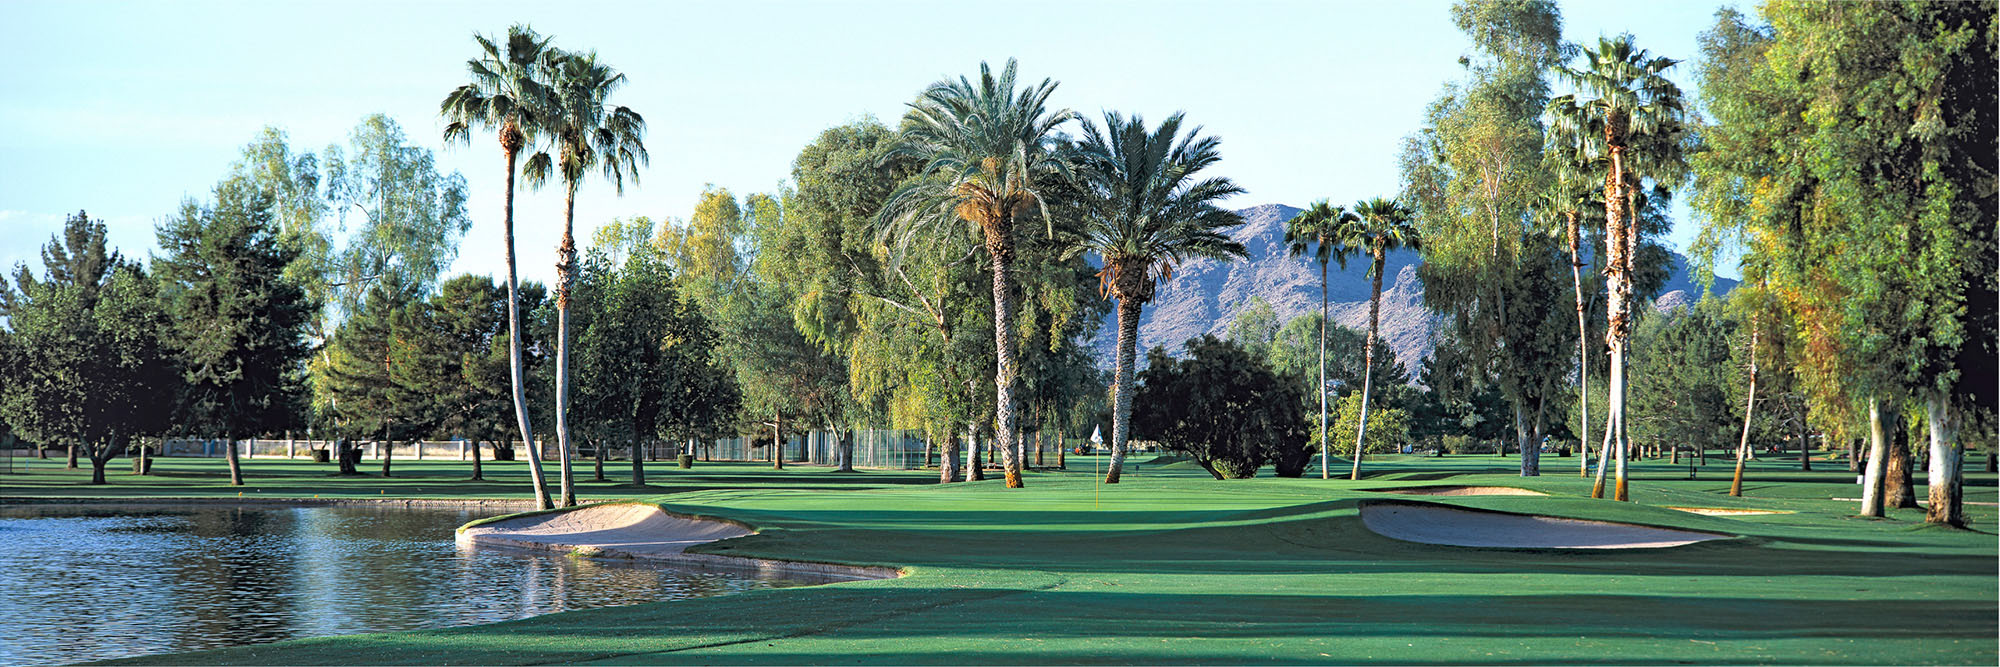 Golf Course Image - Orange Tree No. 18